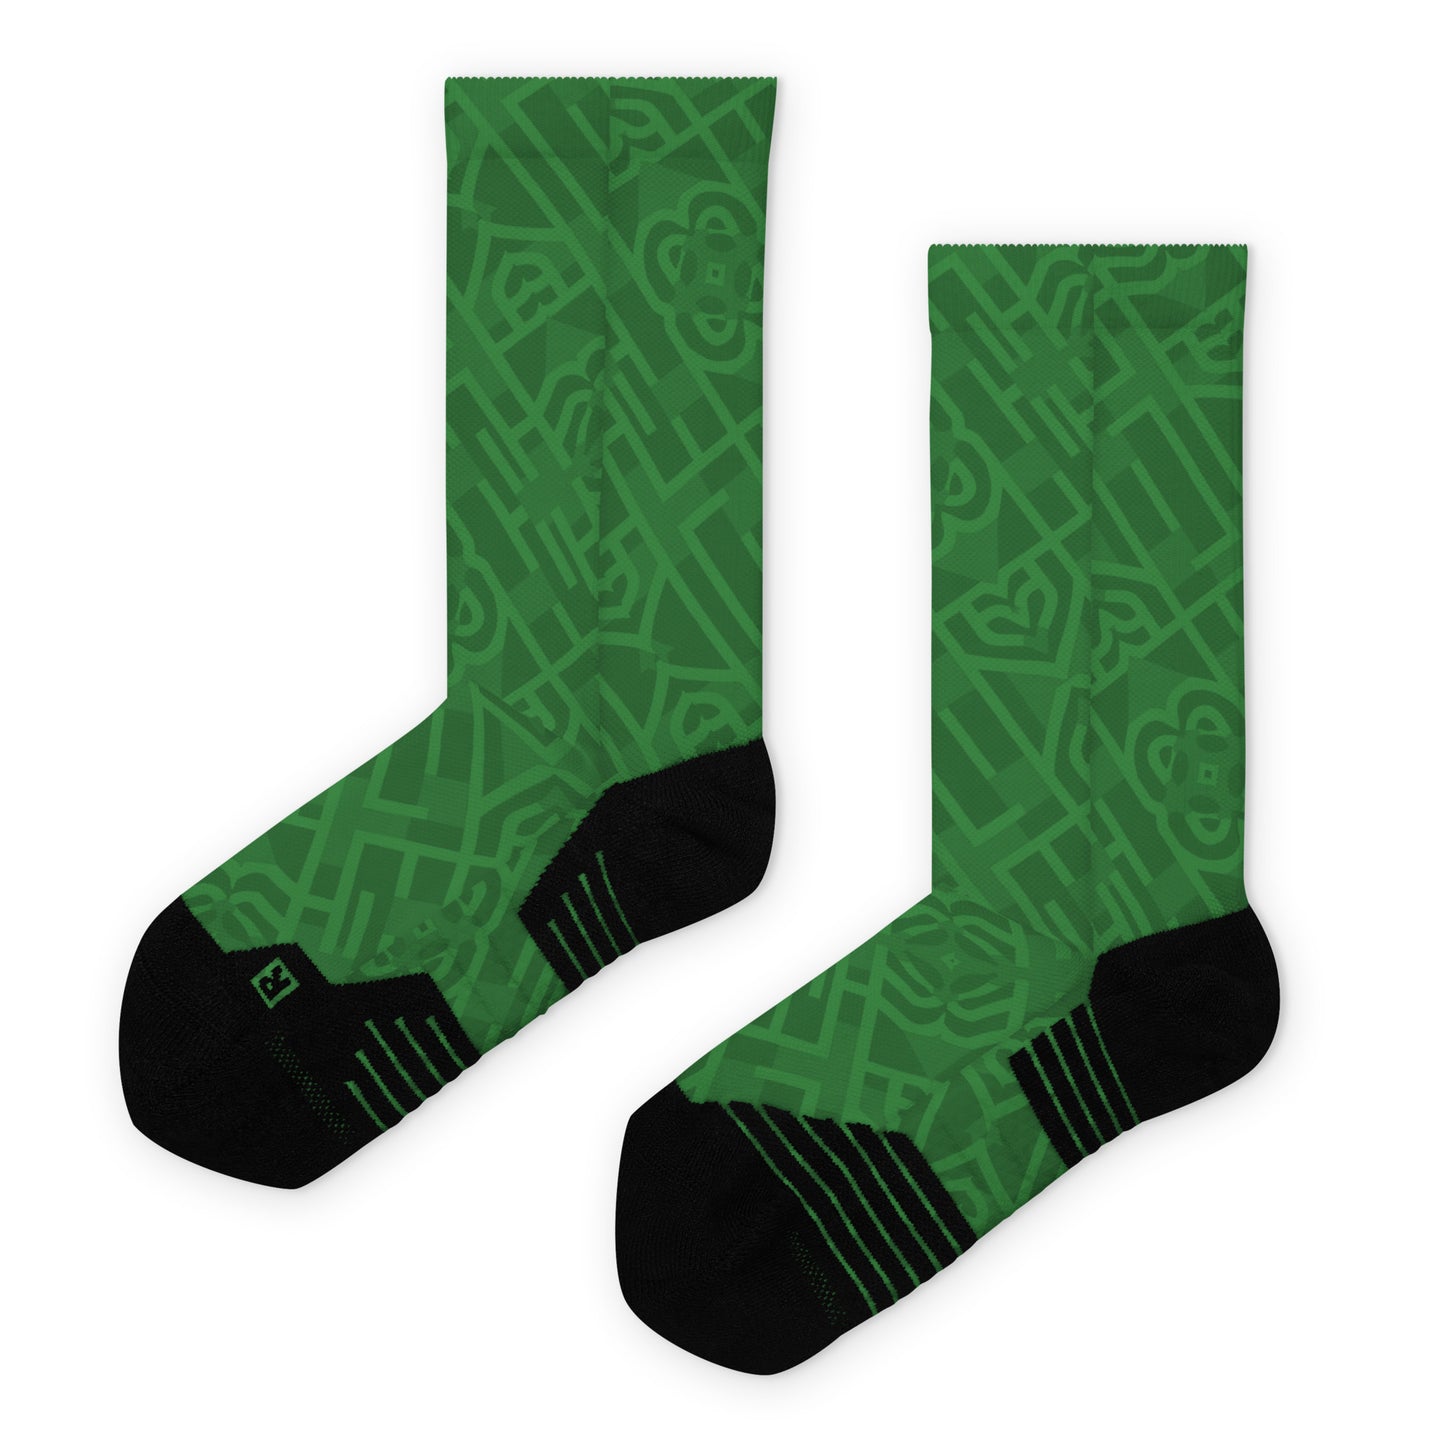 Retro Ireland socks